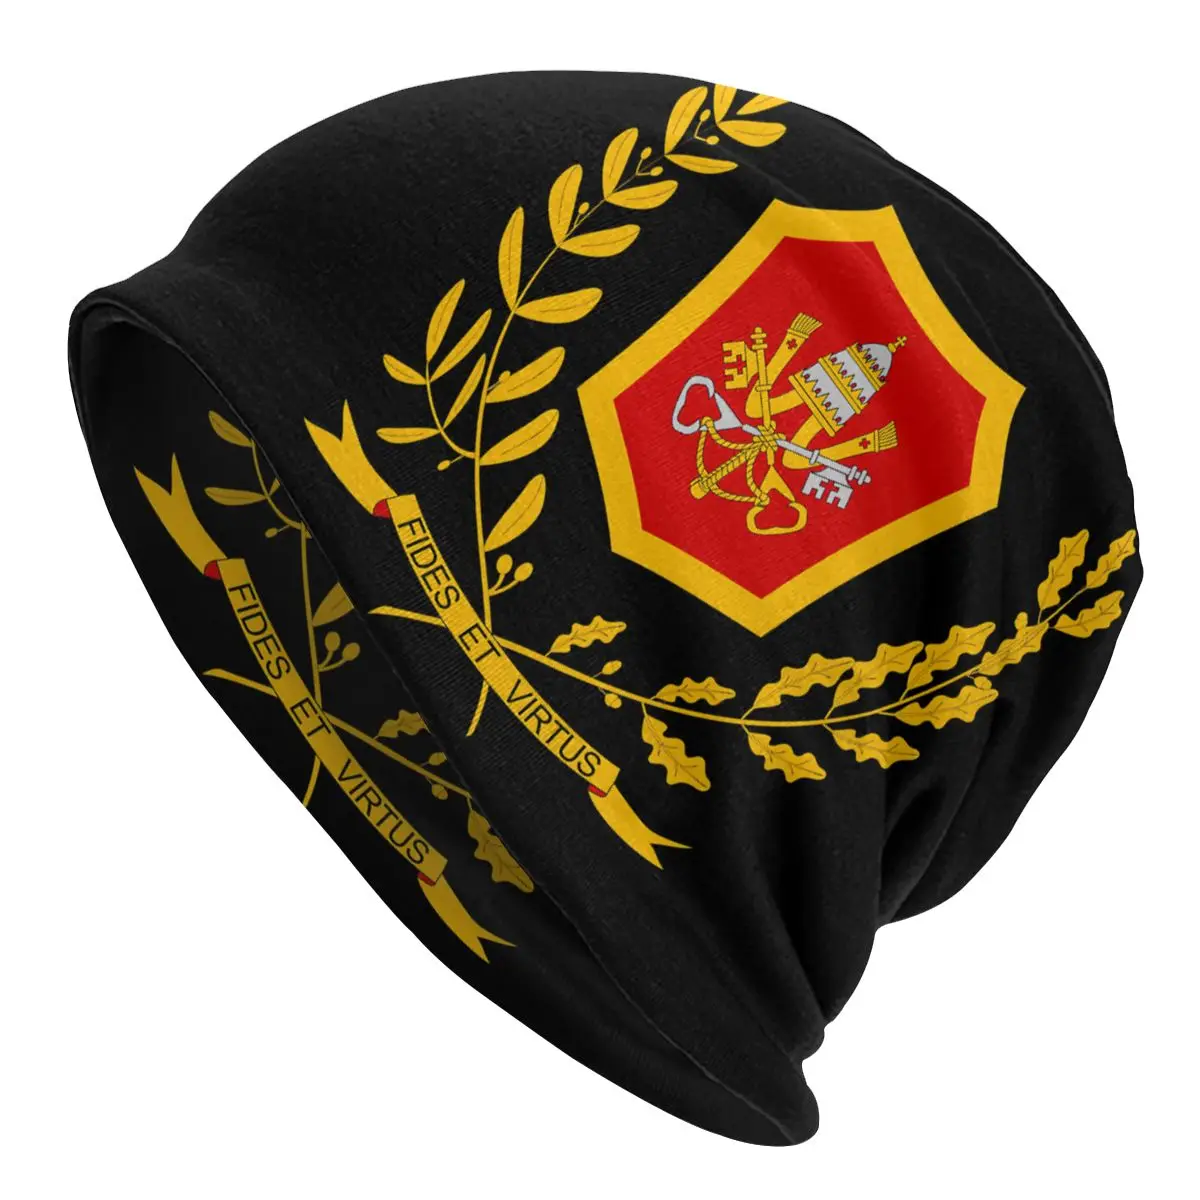 

Bonnet Hats summer Adult Men's Knit Hat Vatican City Gendarmerie Corps Corpo Della Genda caps Novelty Skullies Beanies Caps